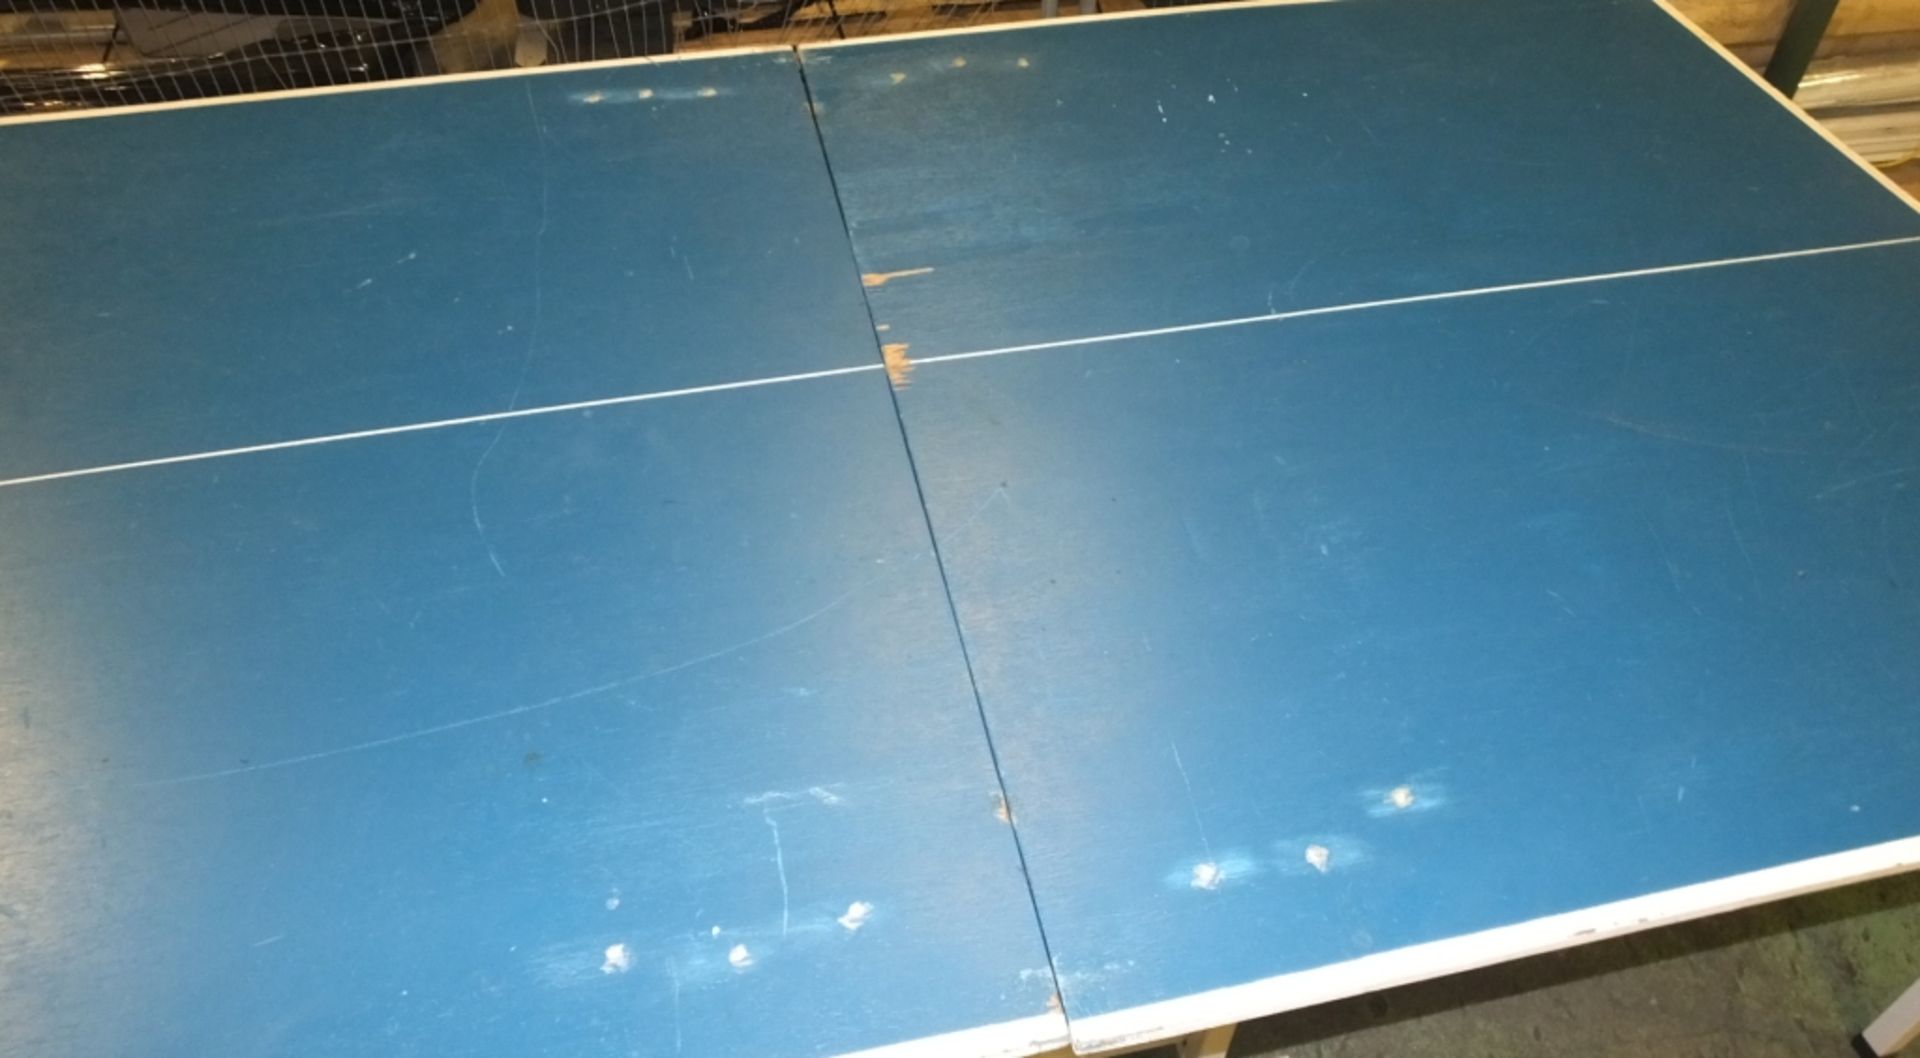 Stiga fold up table tennis table - no net - Image 3 of 5